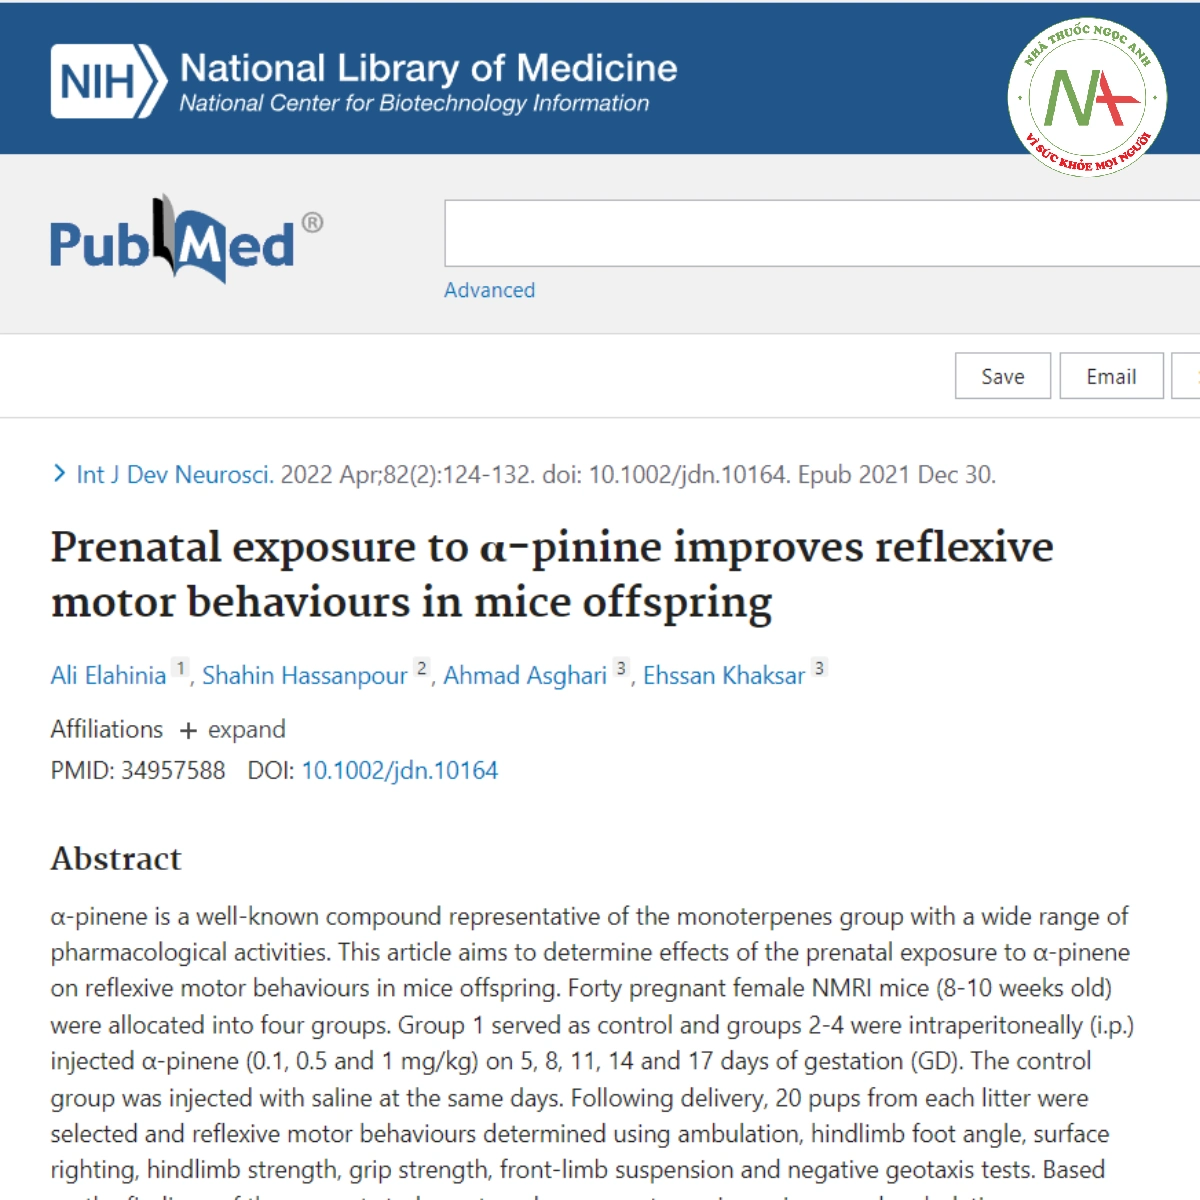 Prenatal exposure to α-pinine improves reflexive motor behaviours in mice offspring